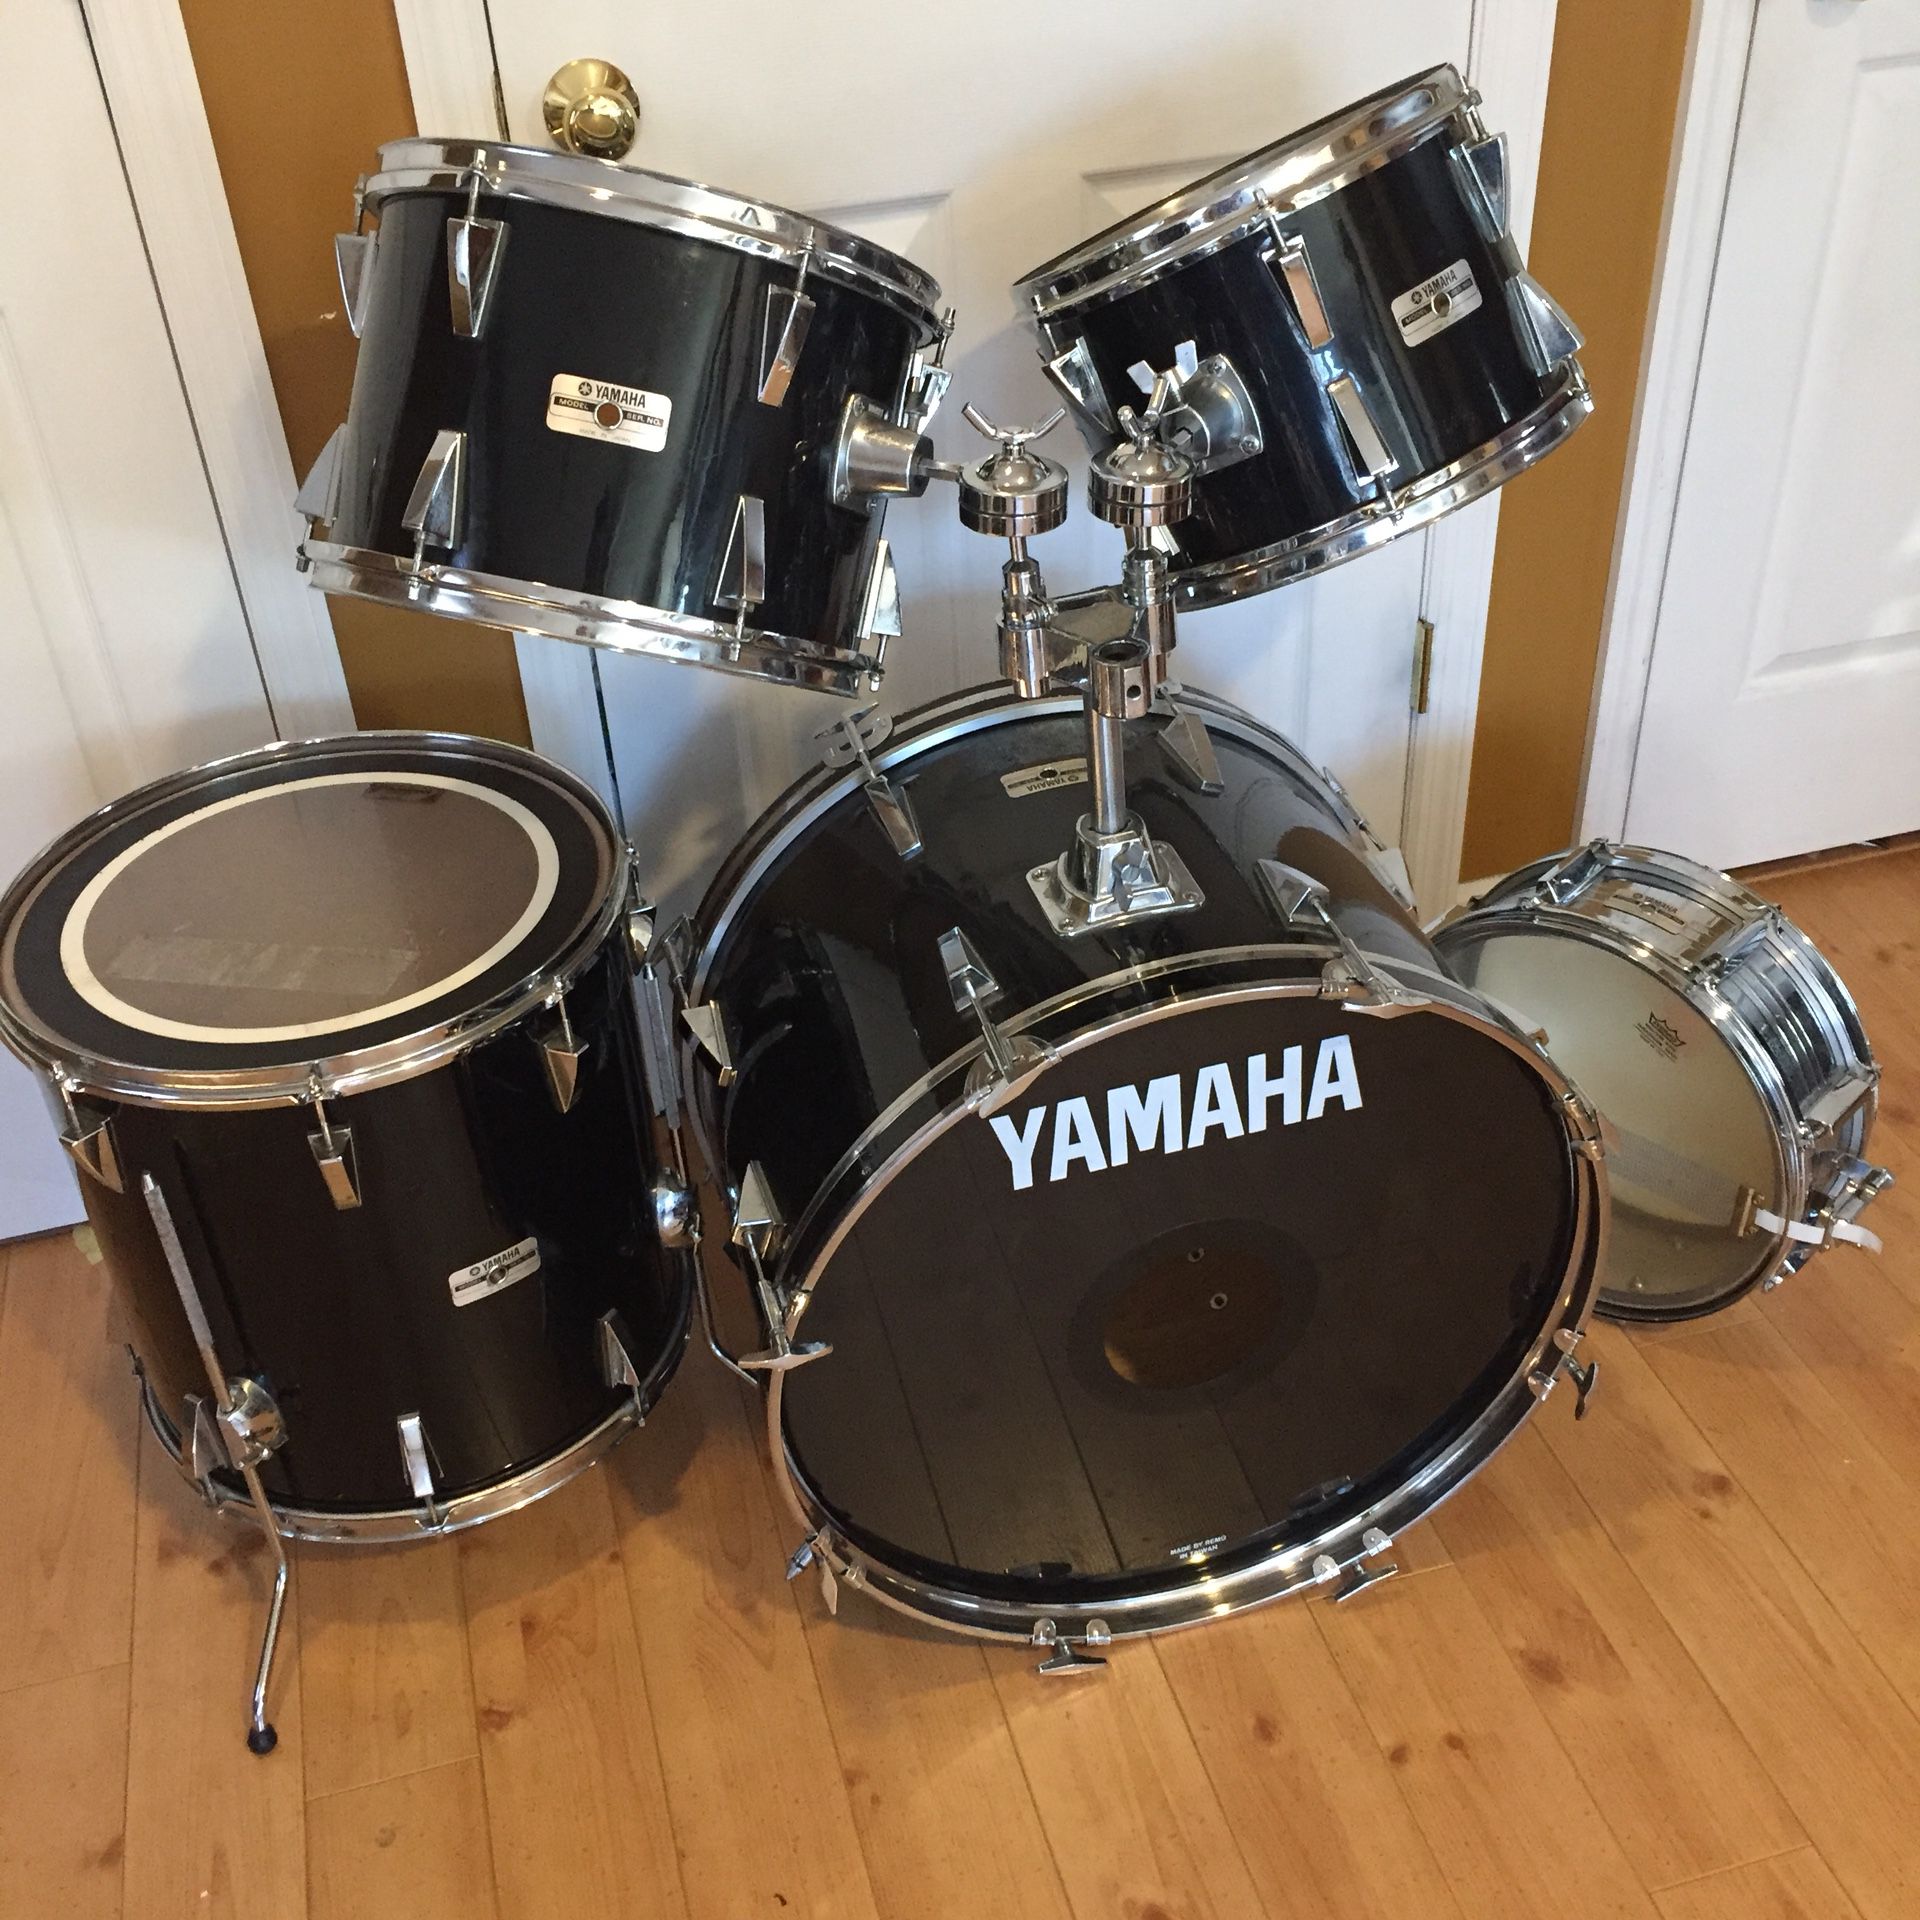 Vintage 80’s Yamaha Drum Kit made in Japan! MIJ shell pack! Sale or trade! Make offer!